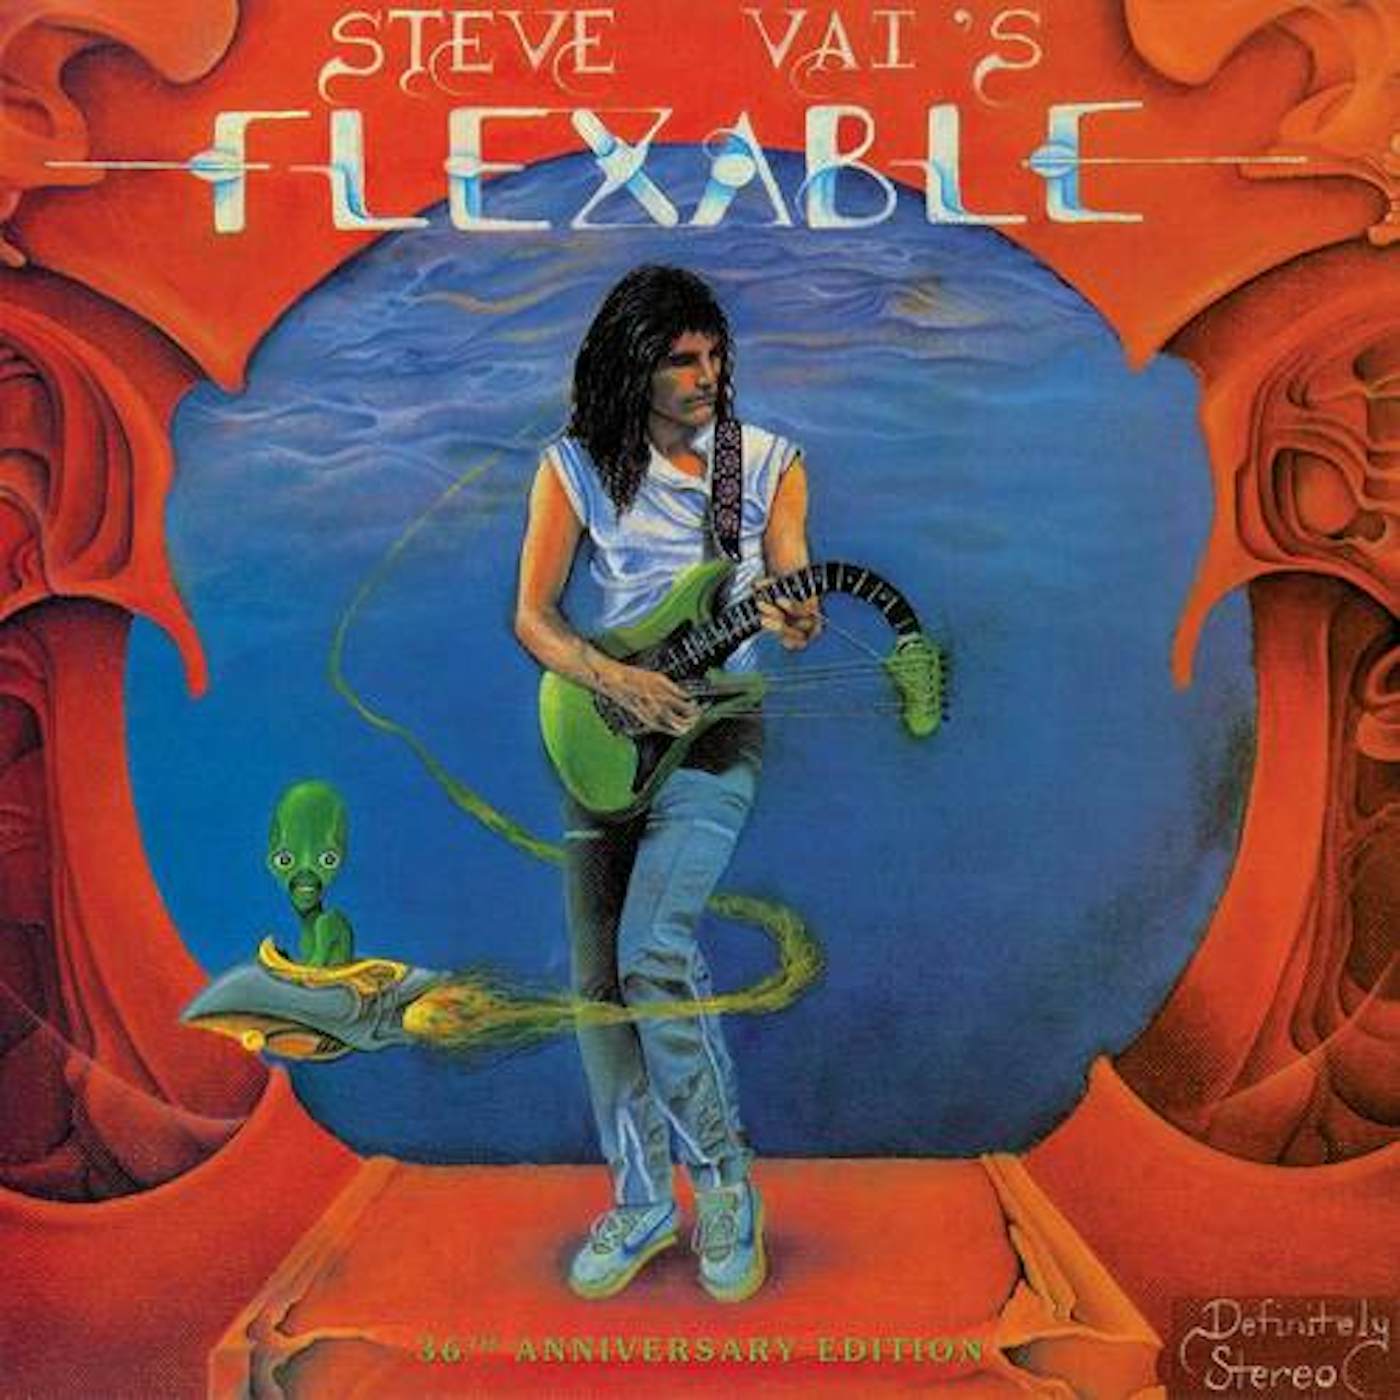 Steve Vai Flex-able (36th Anniversary/180G) vinyl record